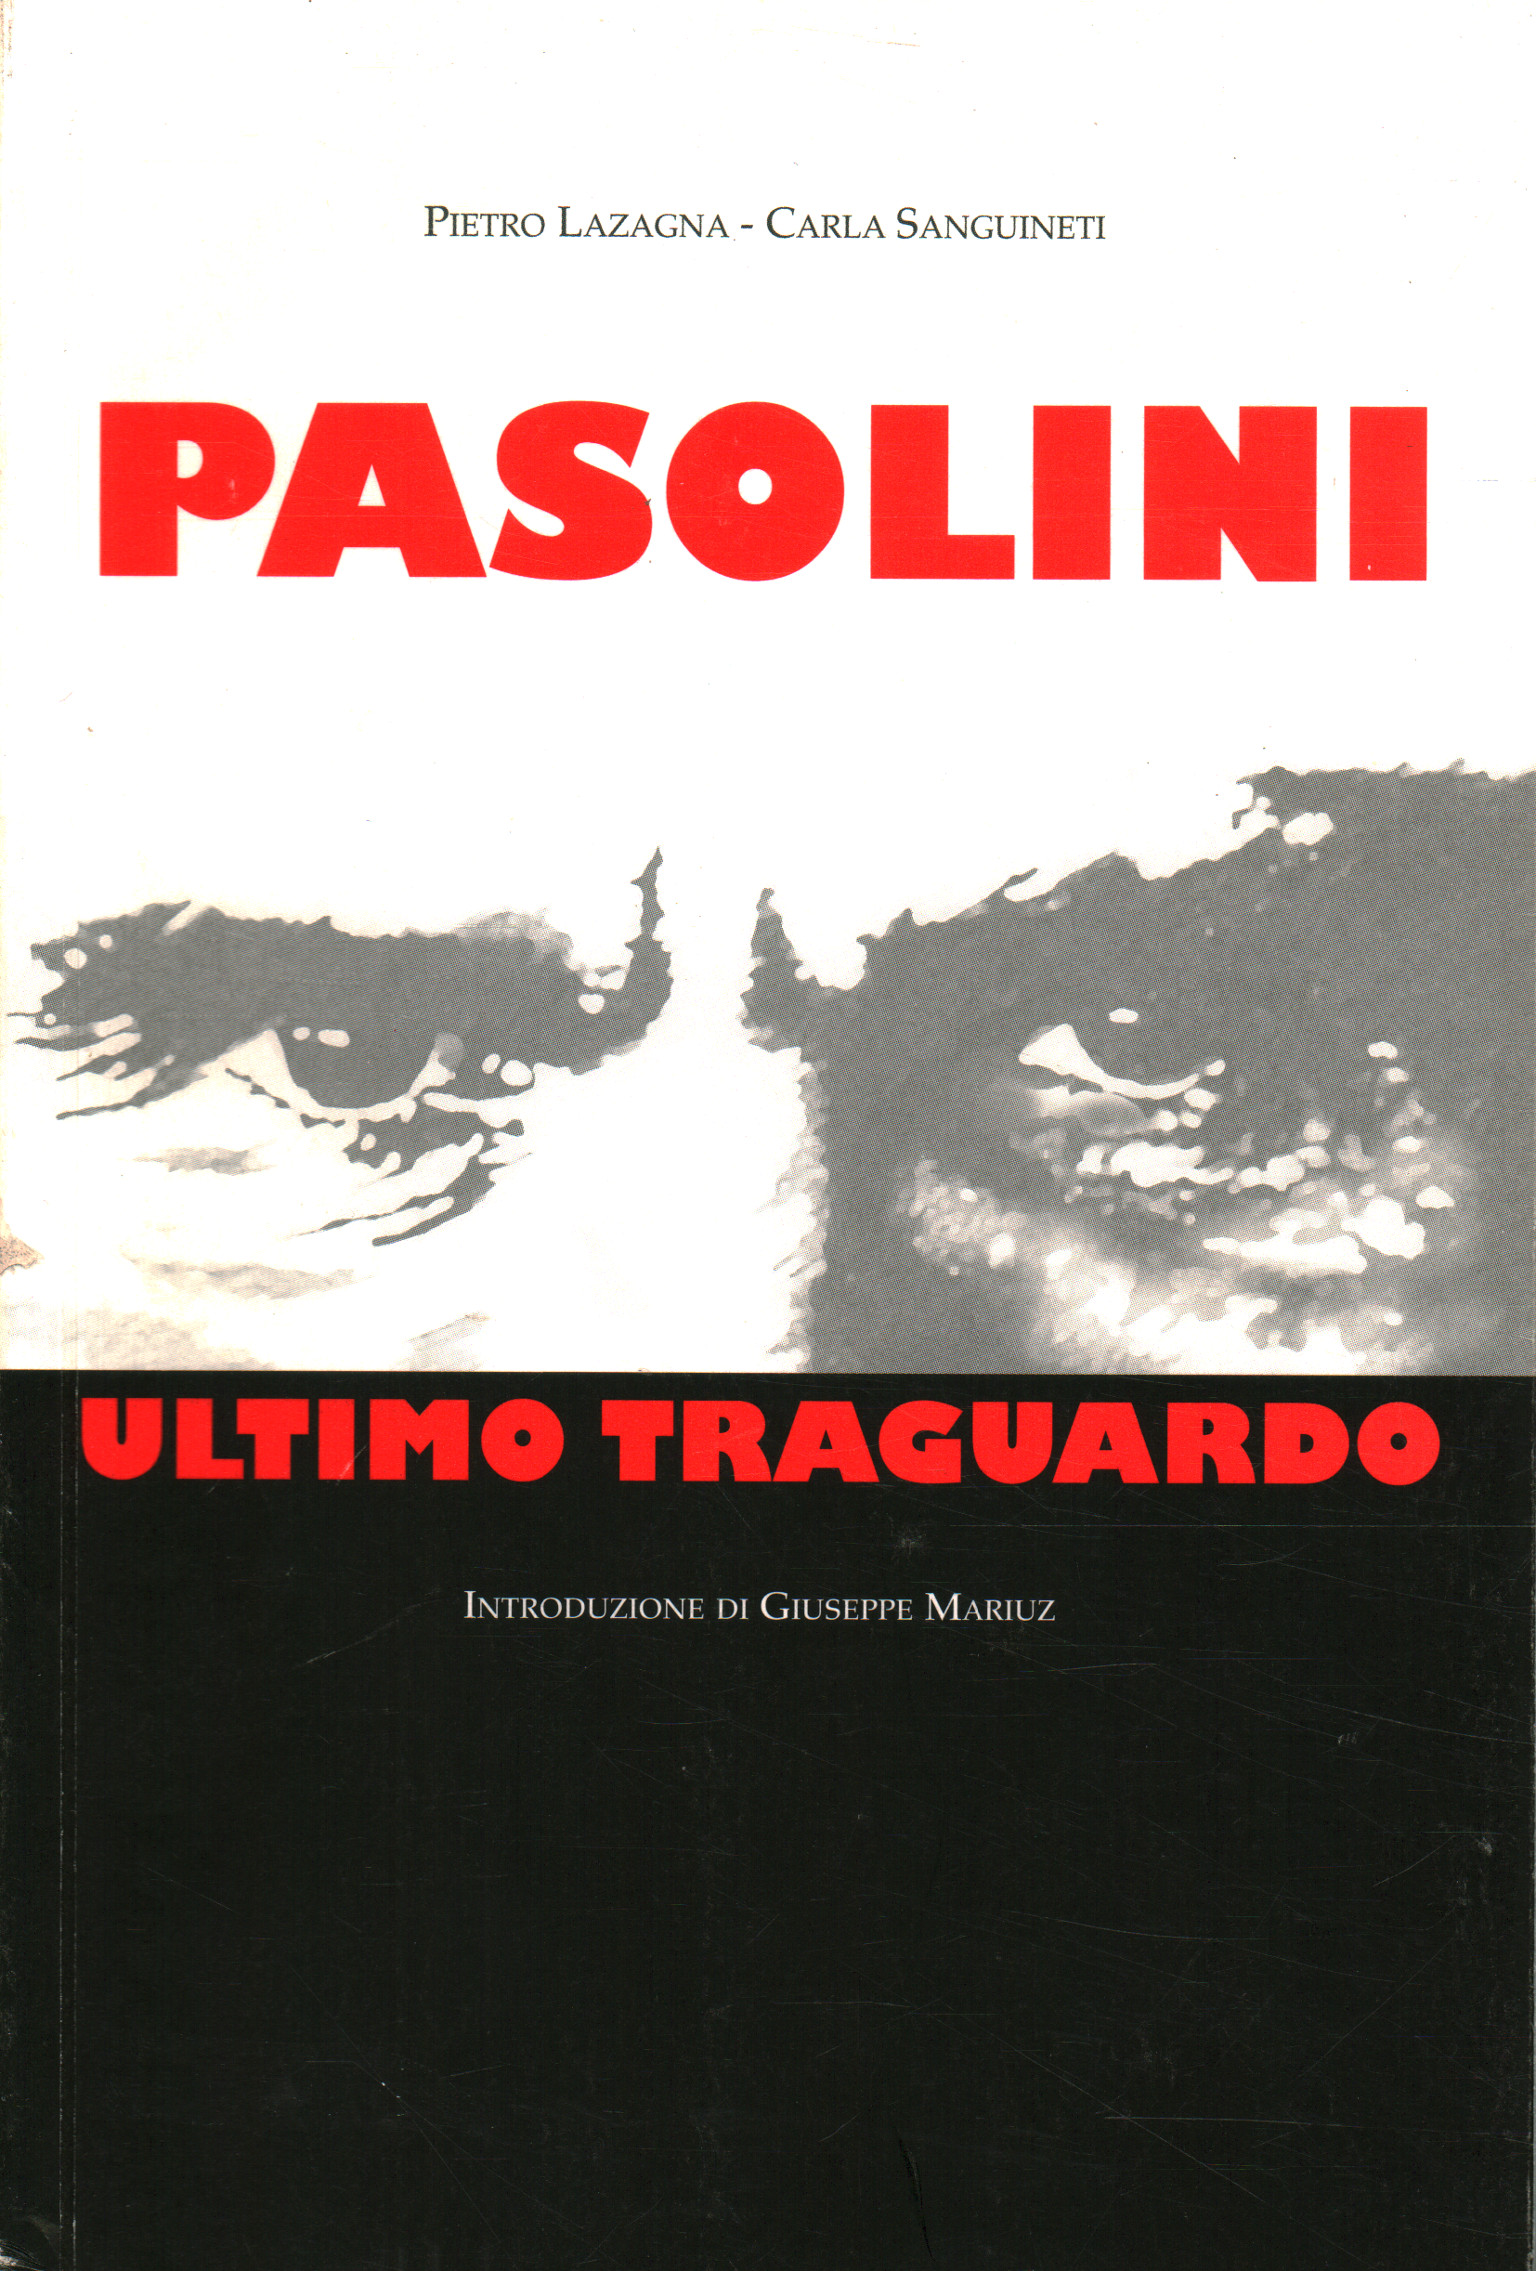 Dernier but de Pasolini, Pietro Lazagna Carla Sanguineti